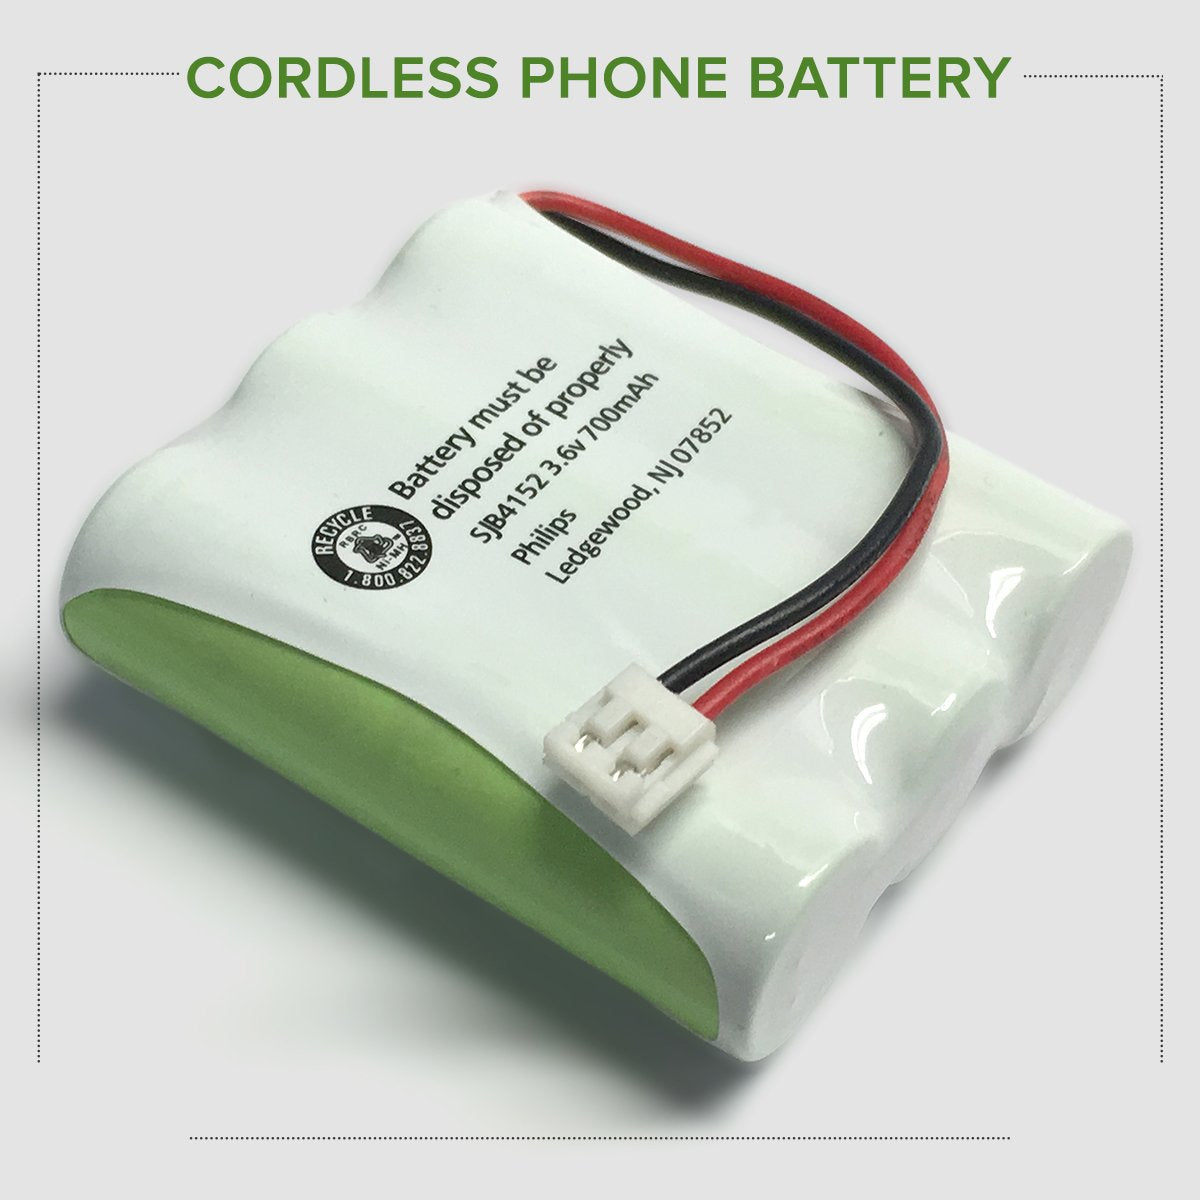 Sony SPP-955 Cordless Phone Battery